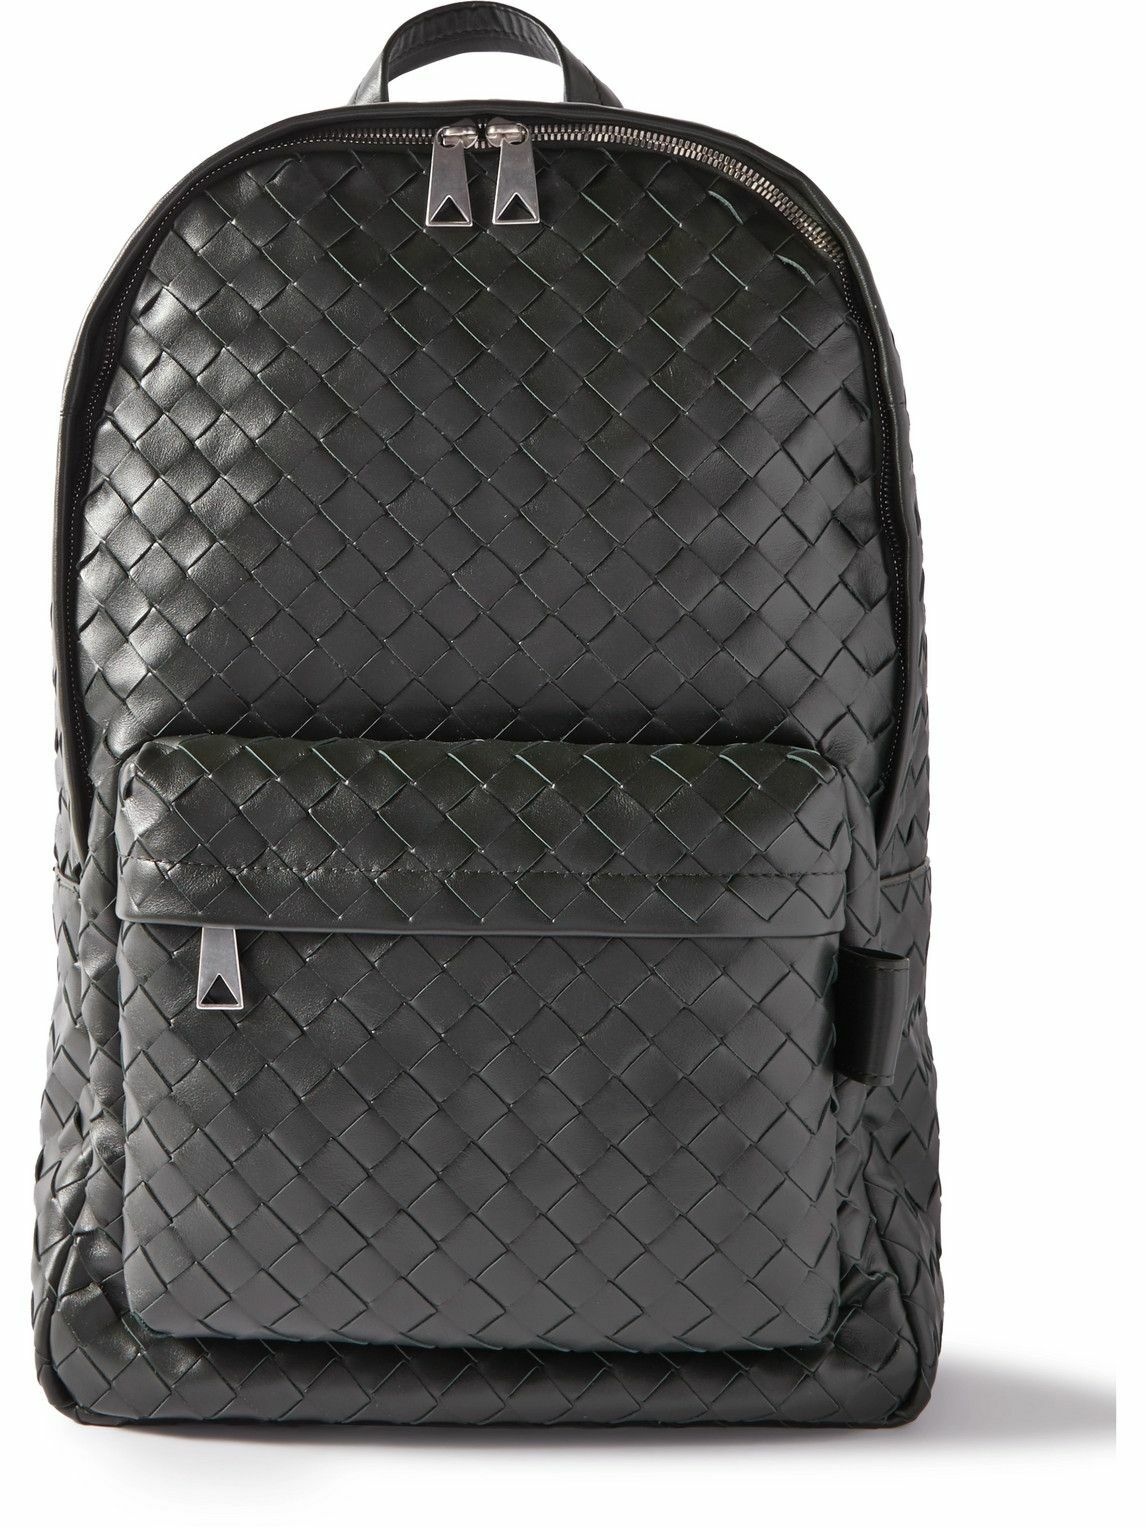 Bottega Veneta - Intrecciato Leather Backpack Bottega Veneta